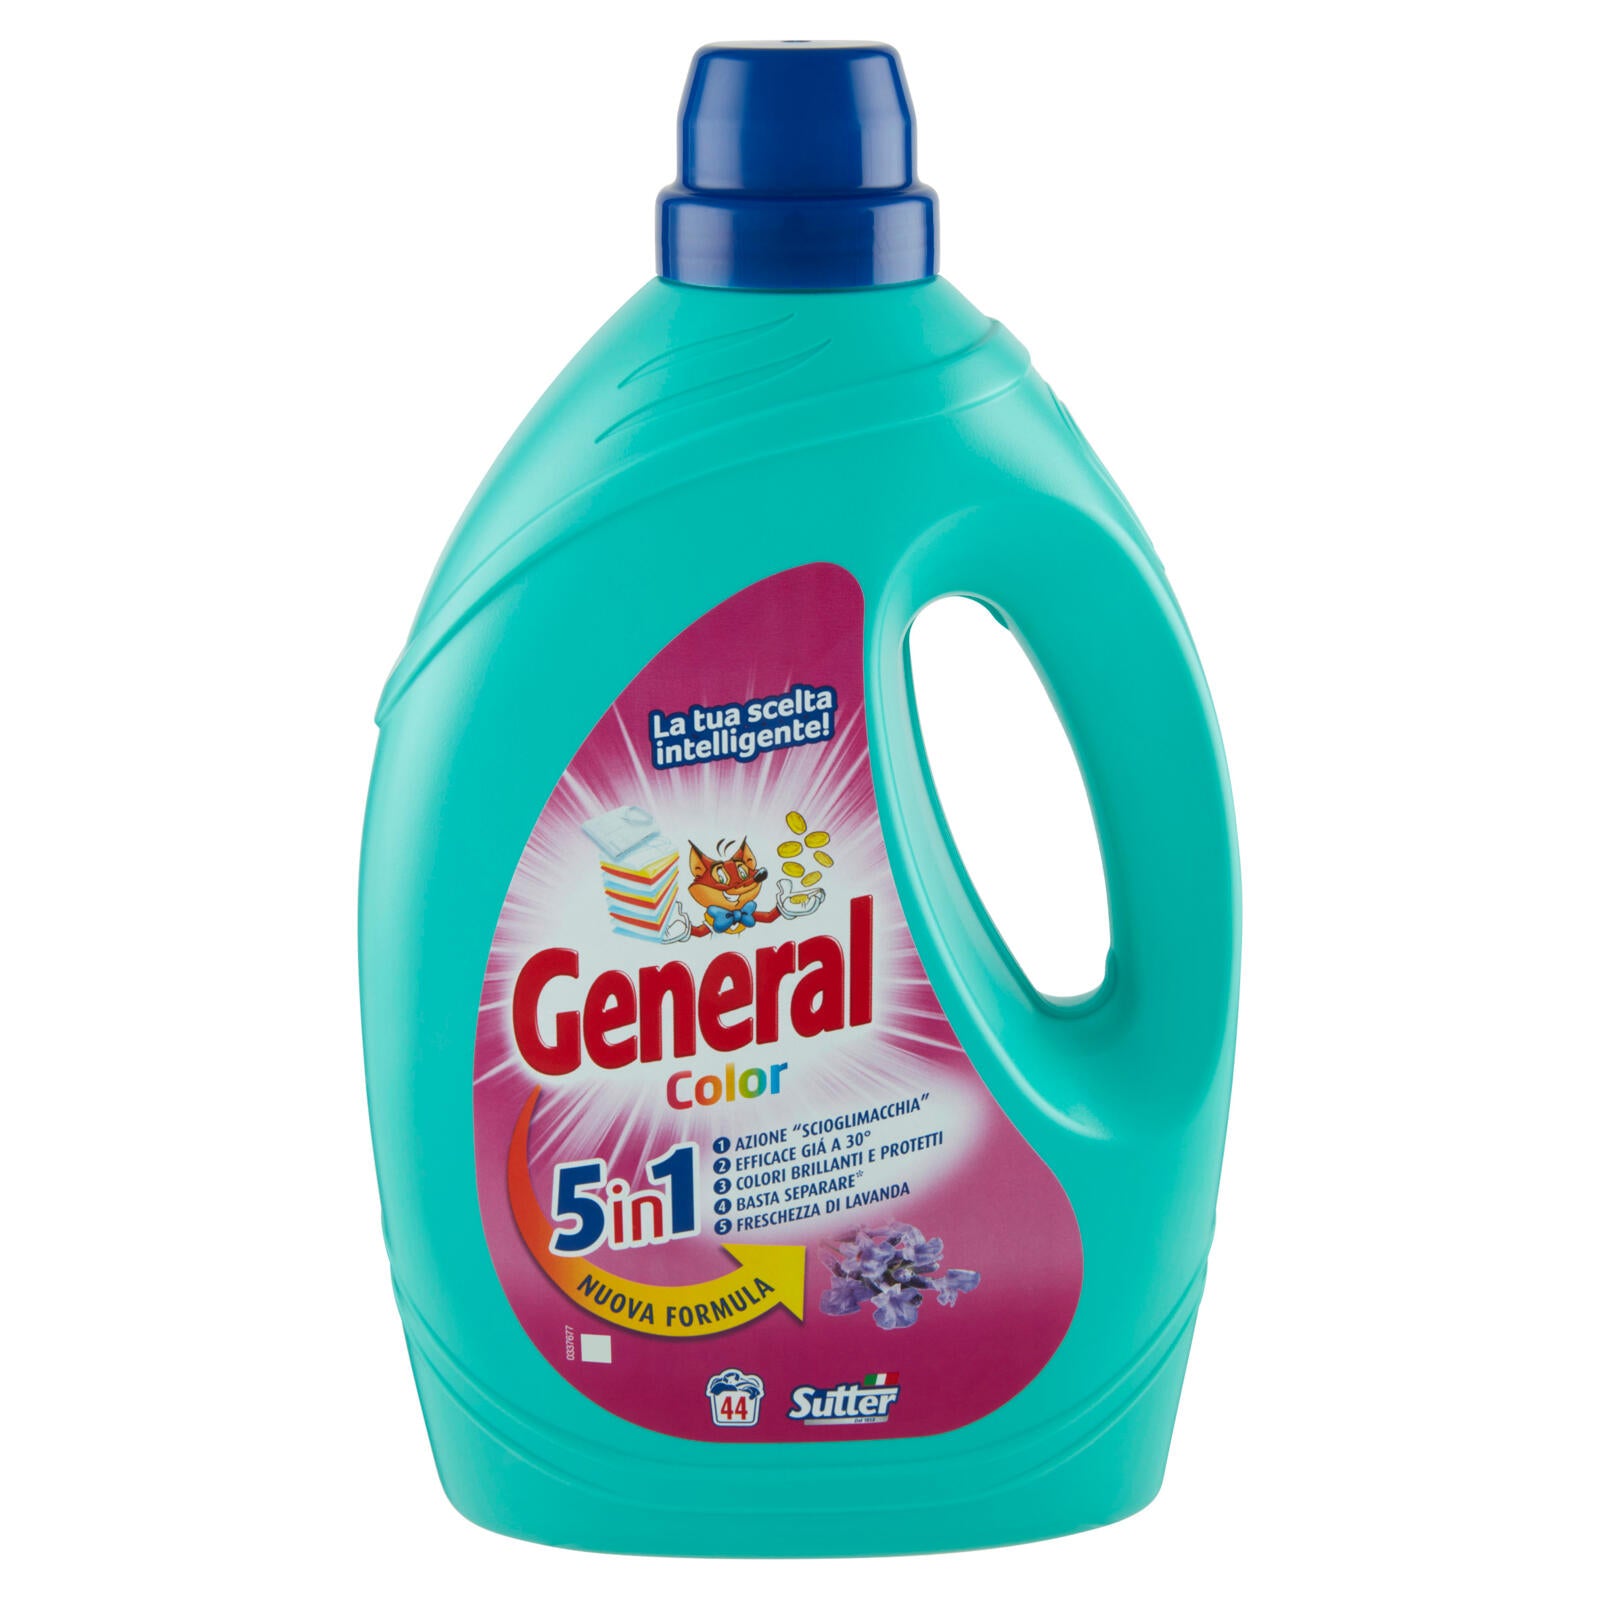 General Color Nuova Formula 5in1 1,98 l